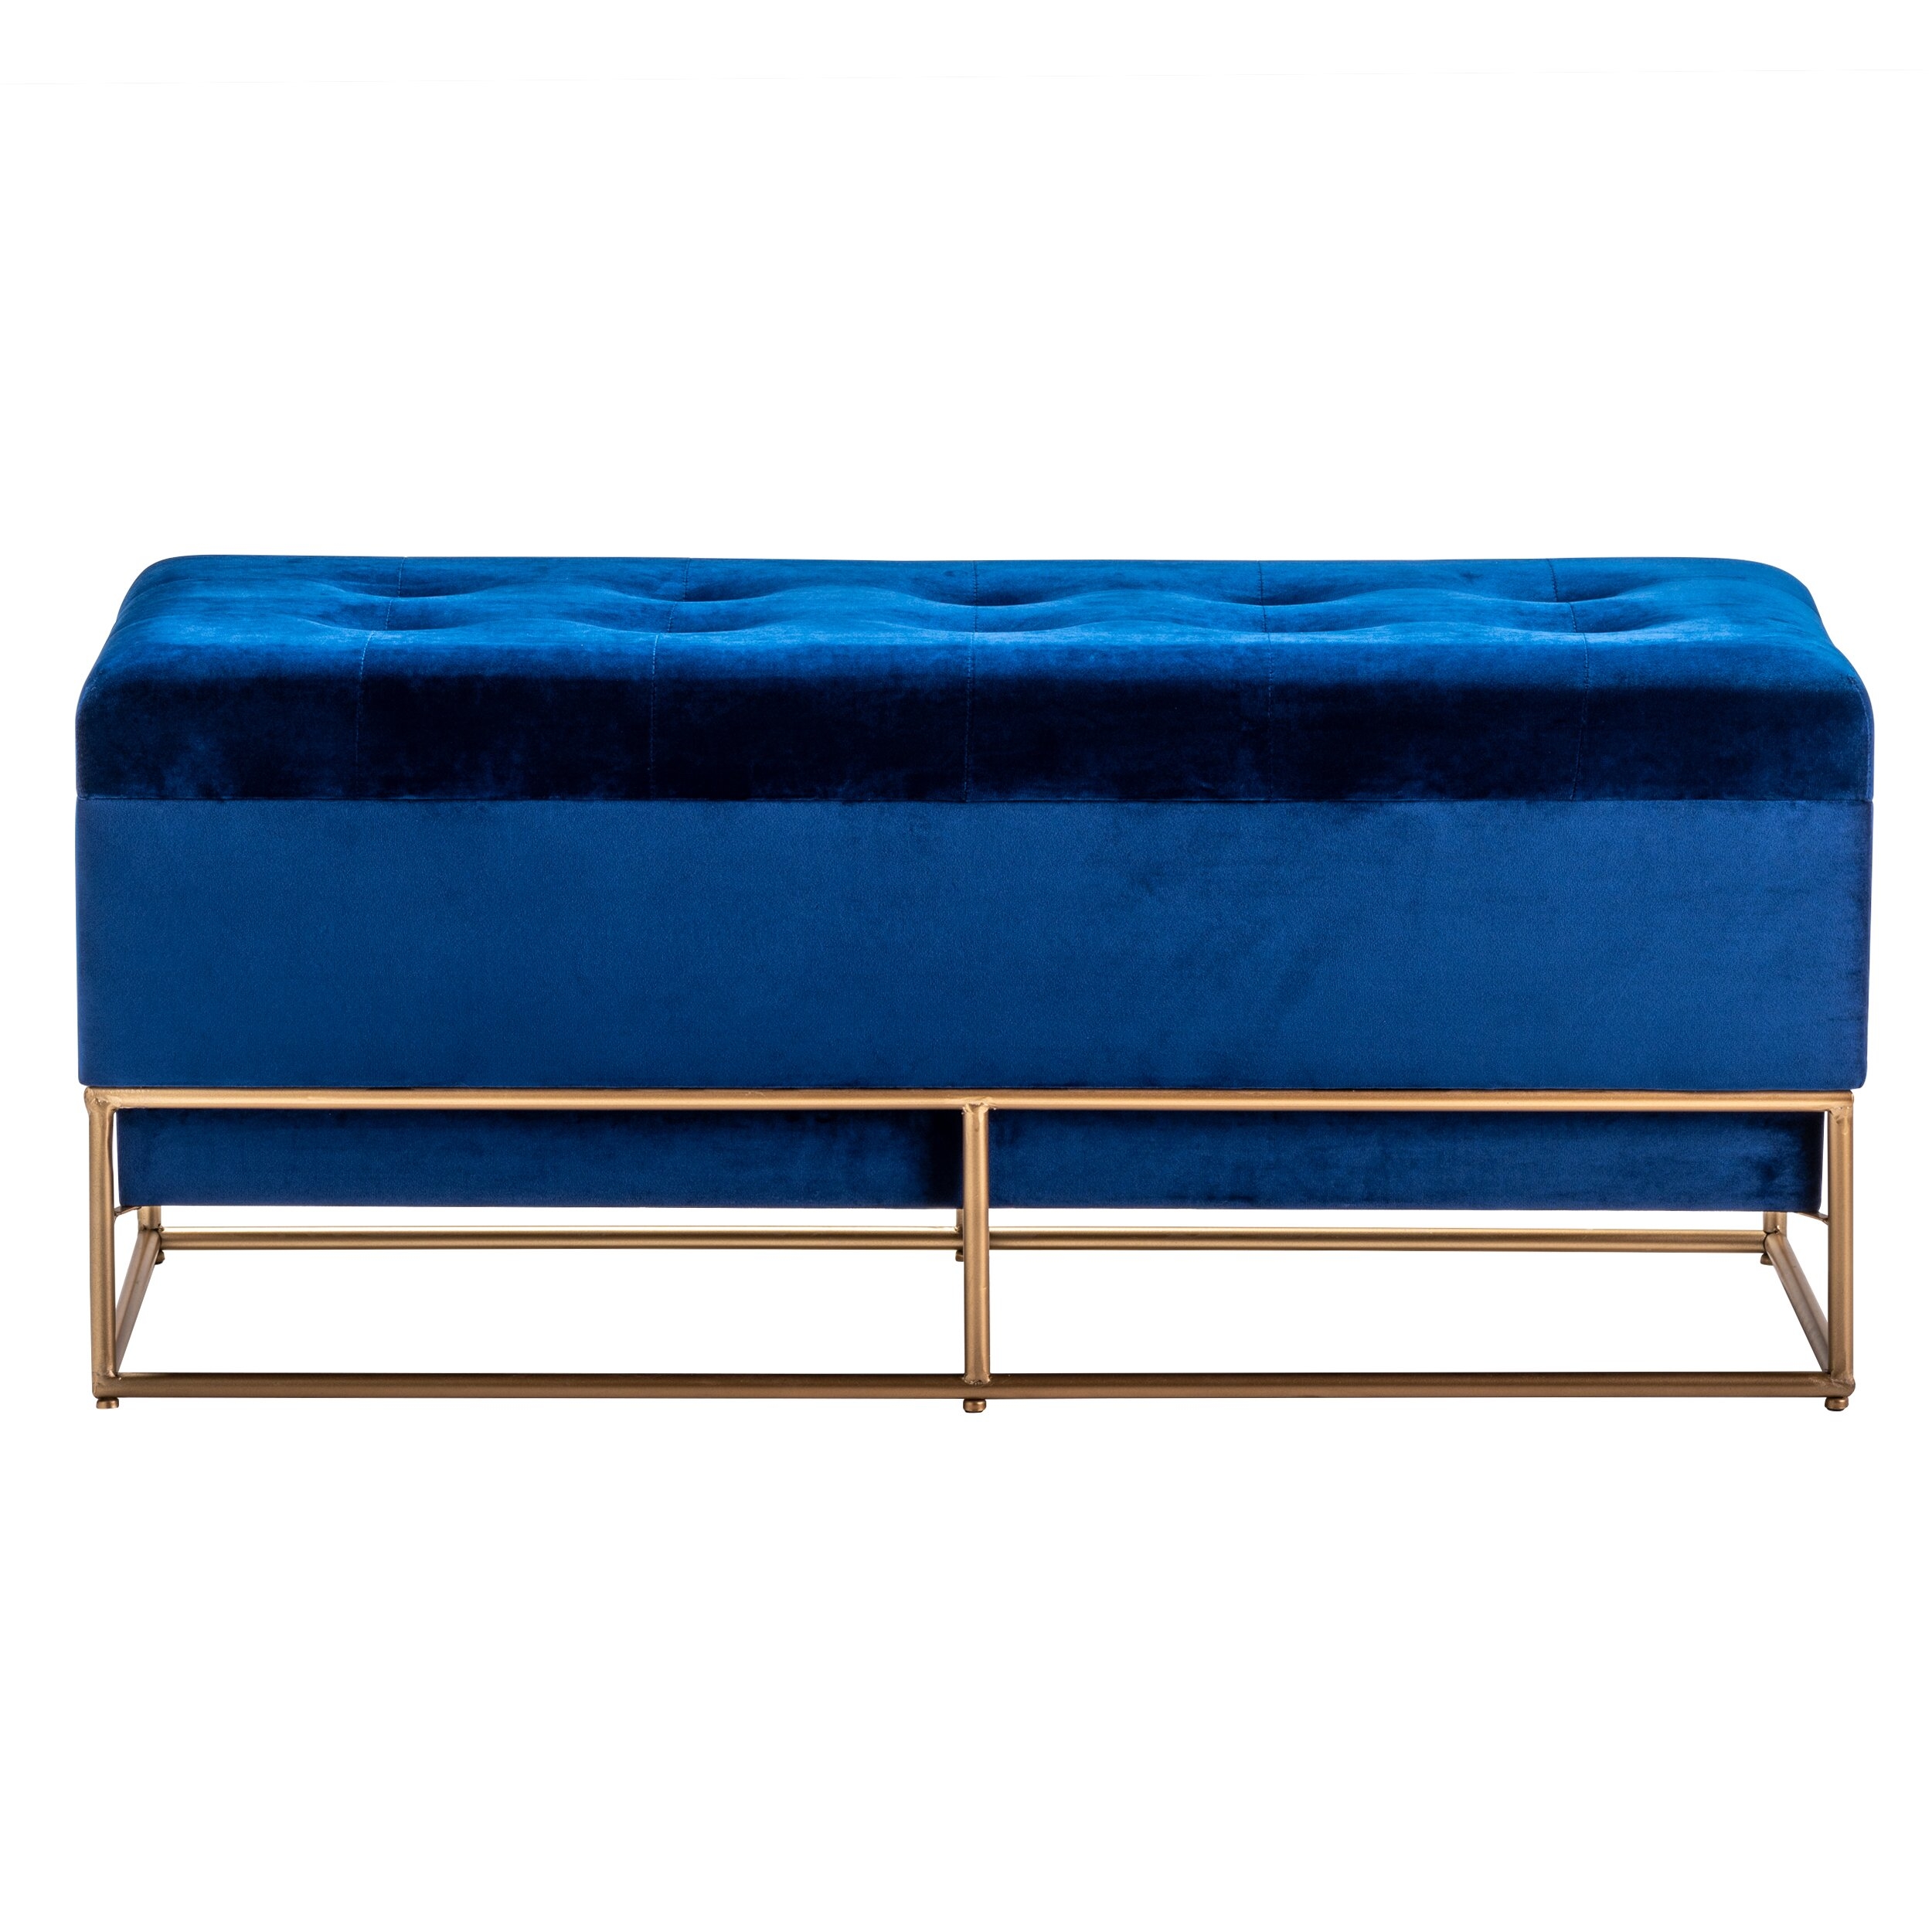 Feldt Tufted Upholstered Storage Bench - Image 0